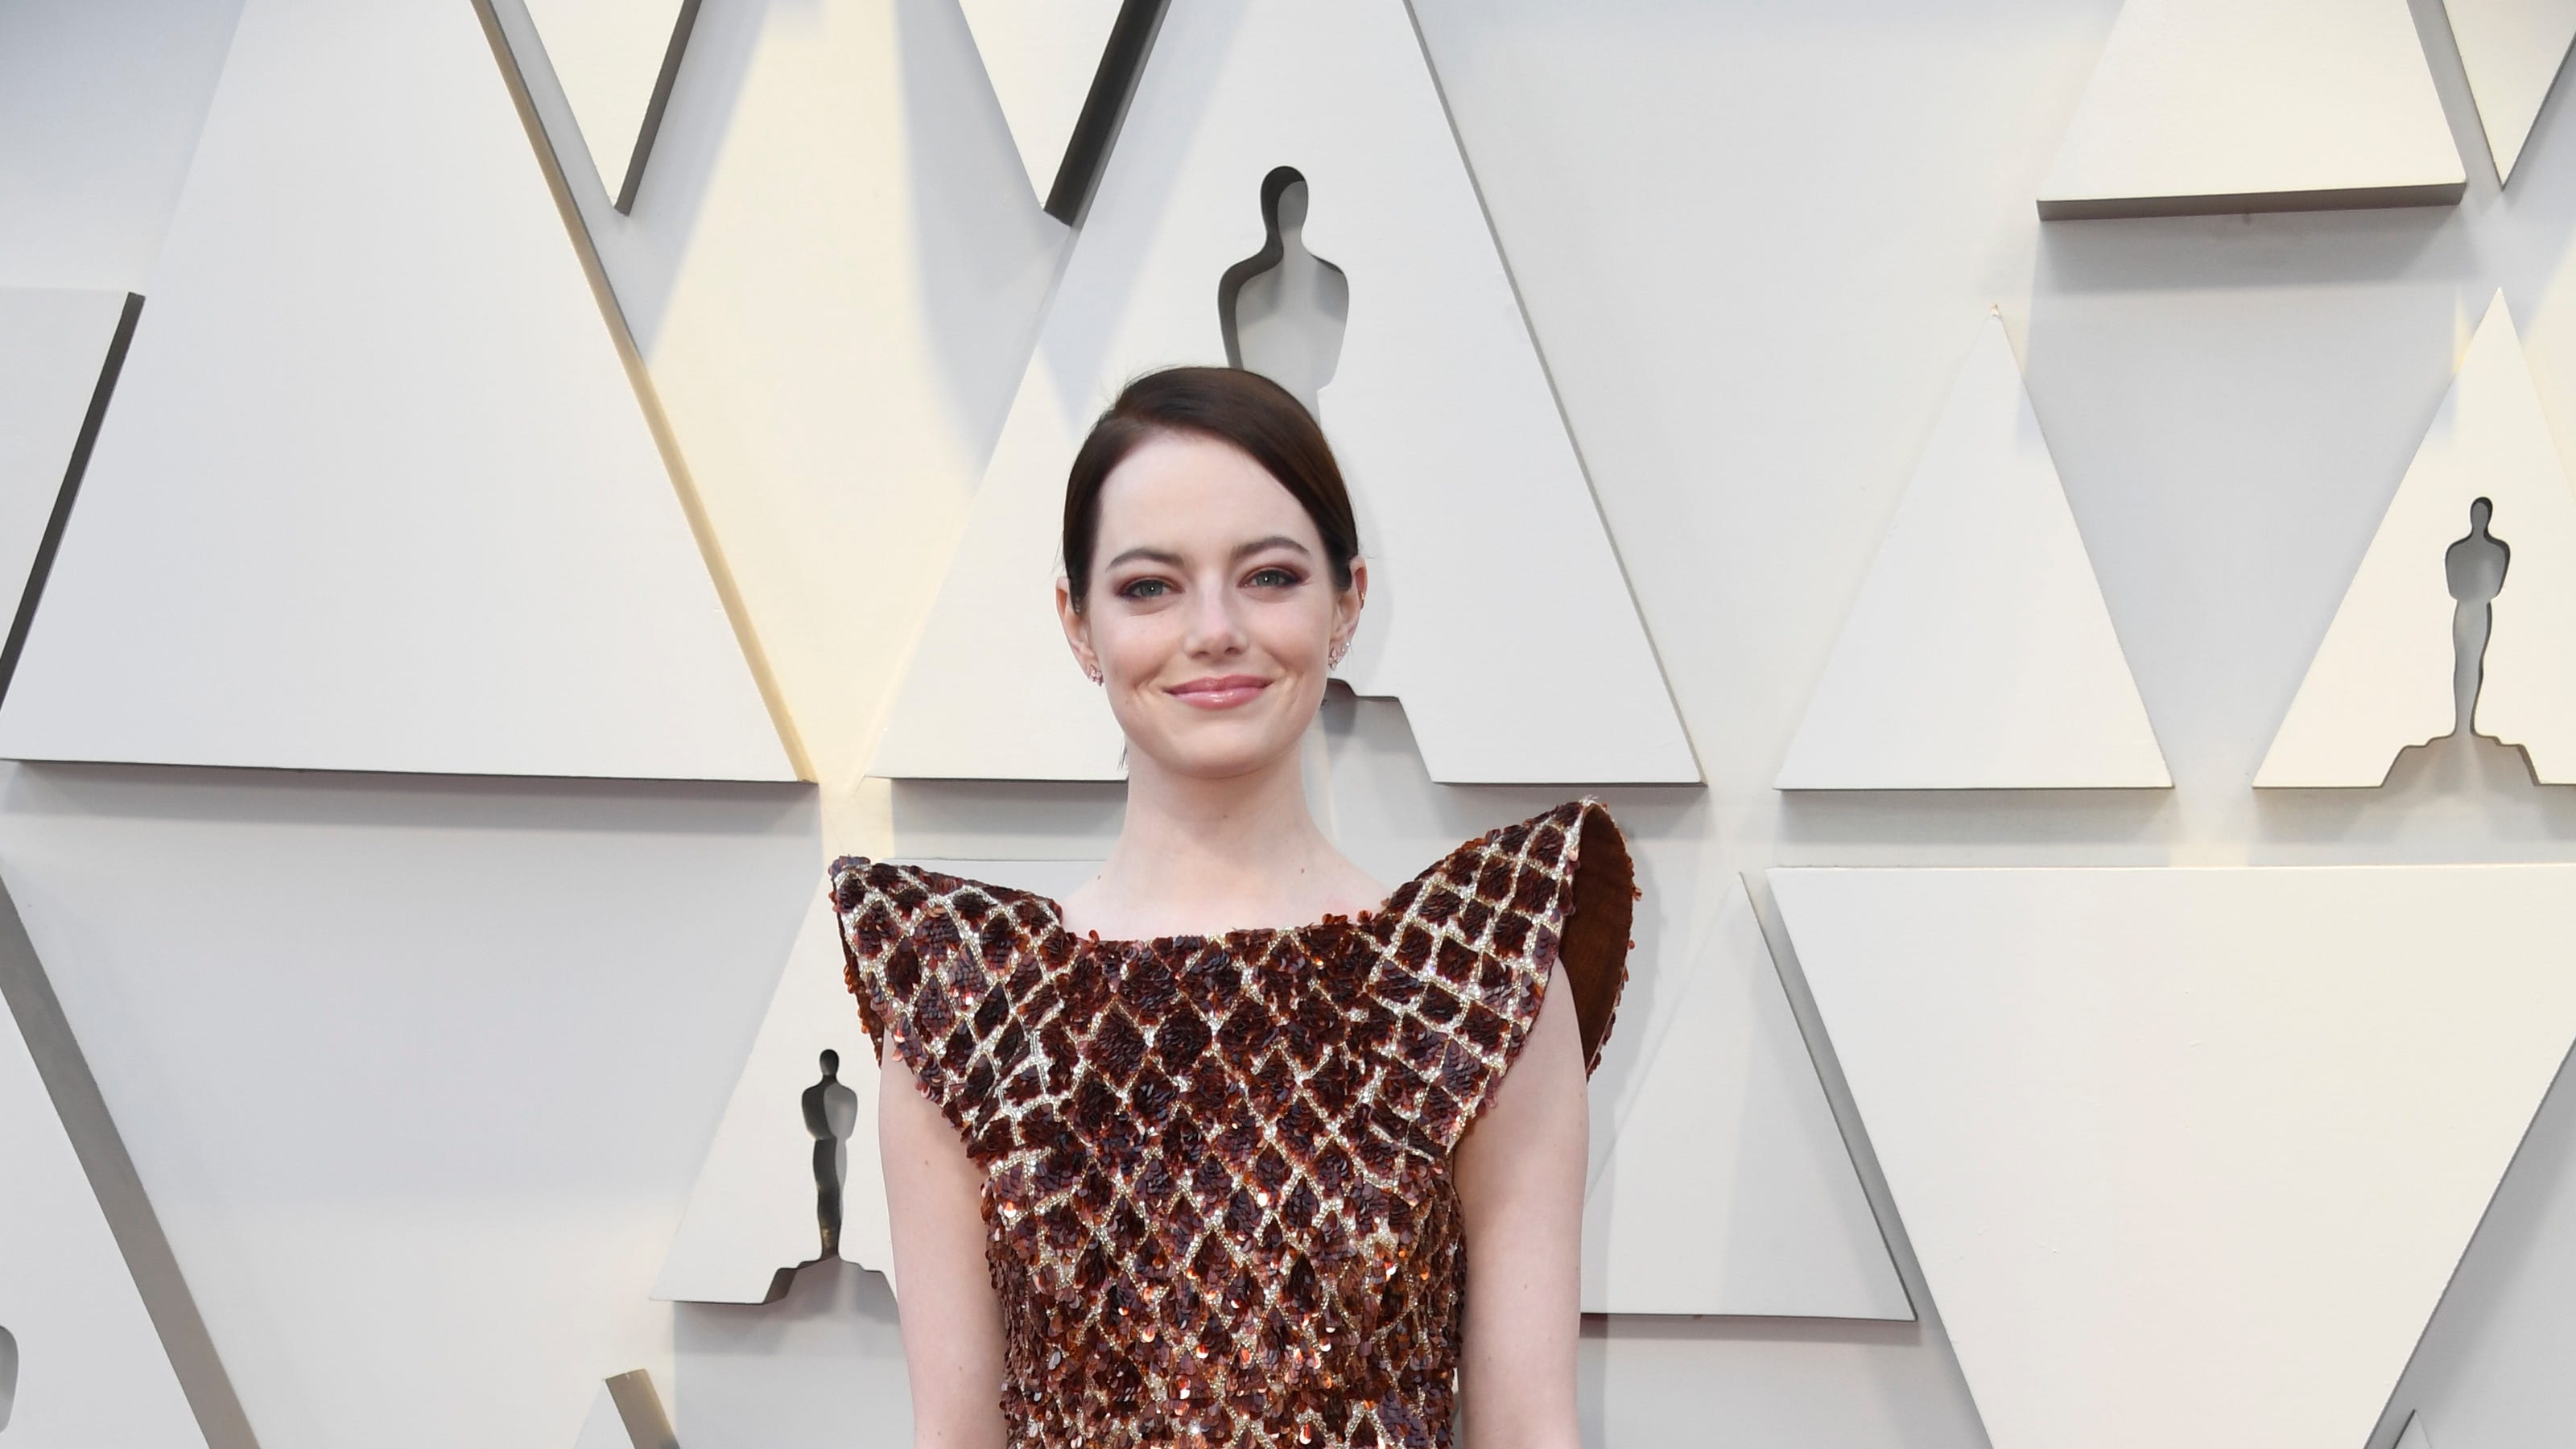 Oscars 2019 Worstdressed stars of the red carpet